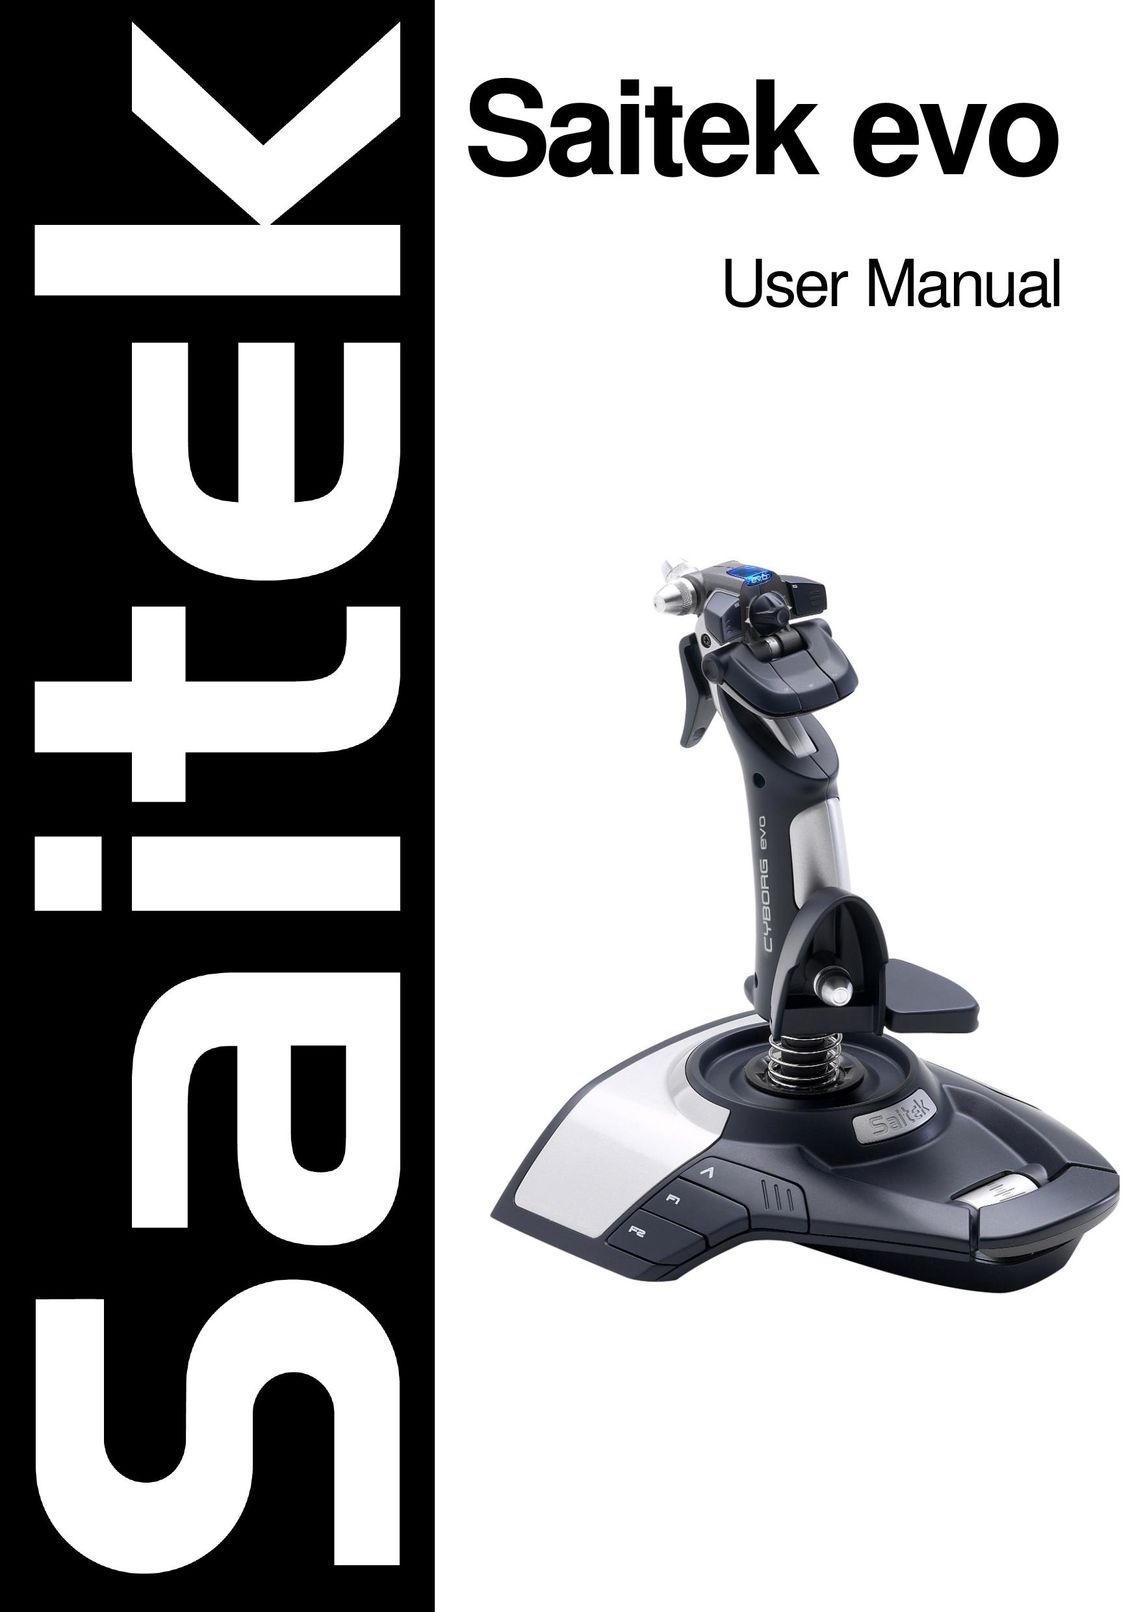 Saitek evo Games User Manual